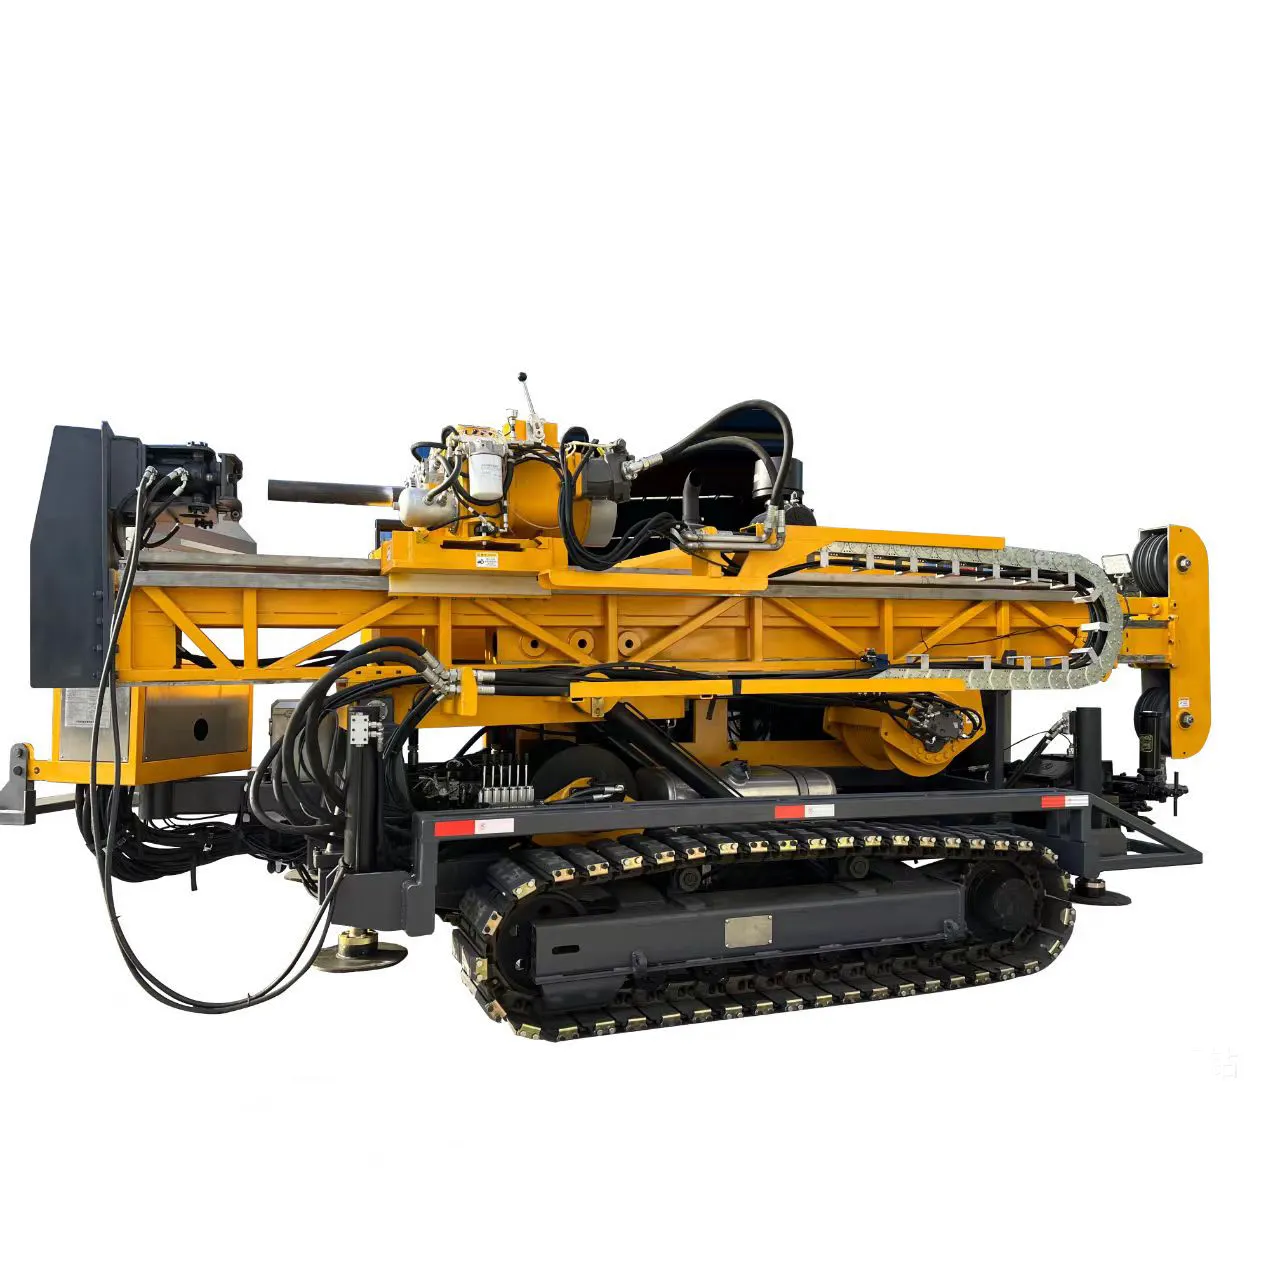 XZCR-18 full hydraulic core drilling machine NQ HQ PQ for mineral exploration